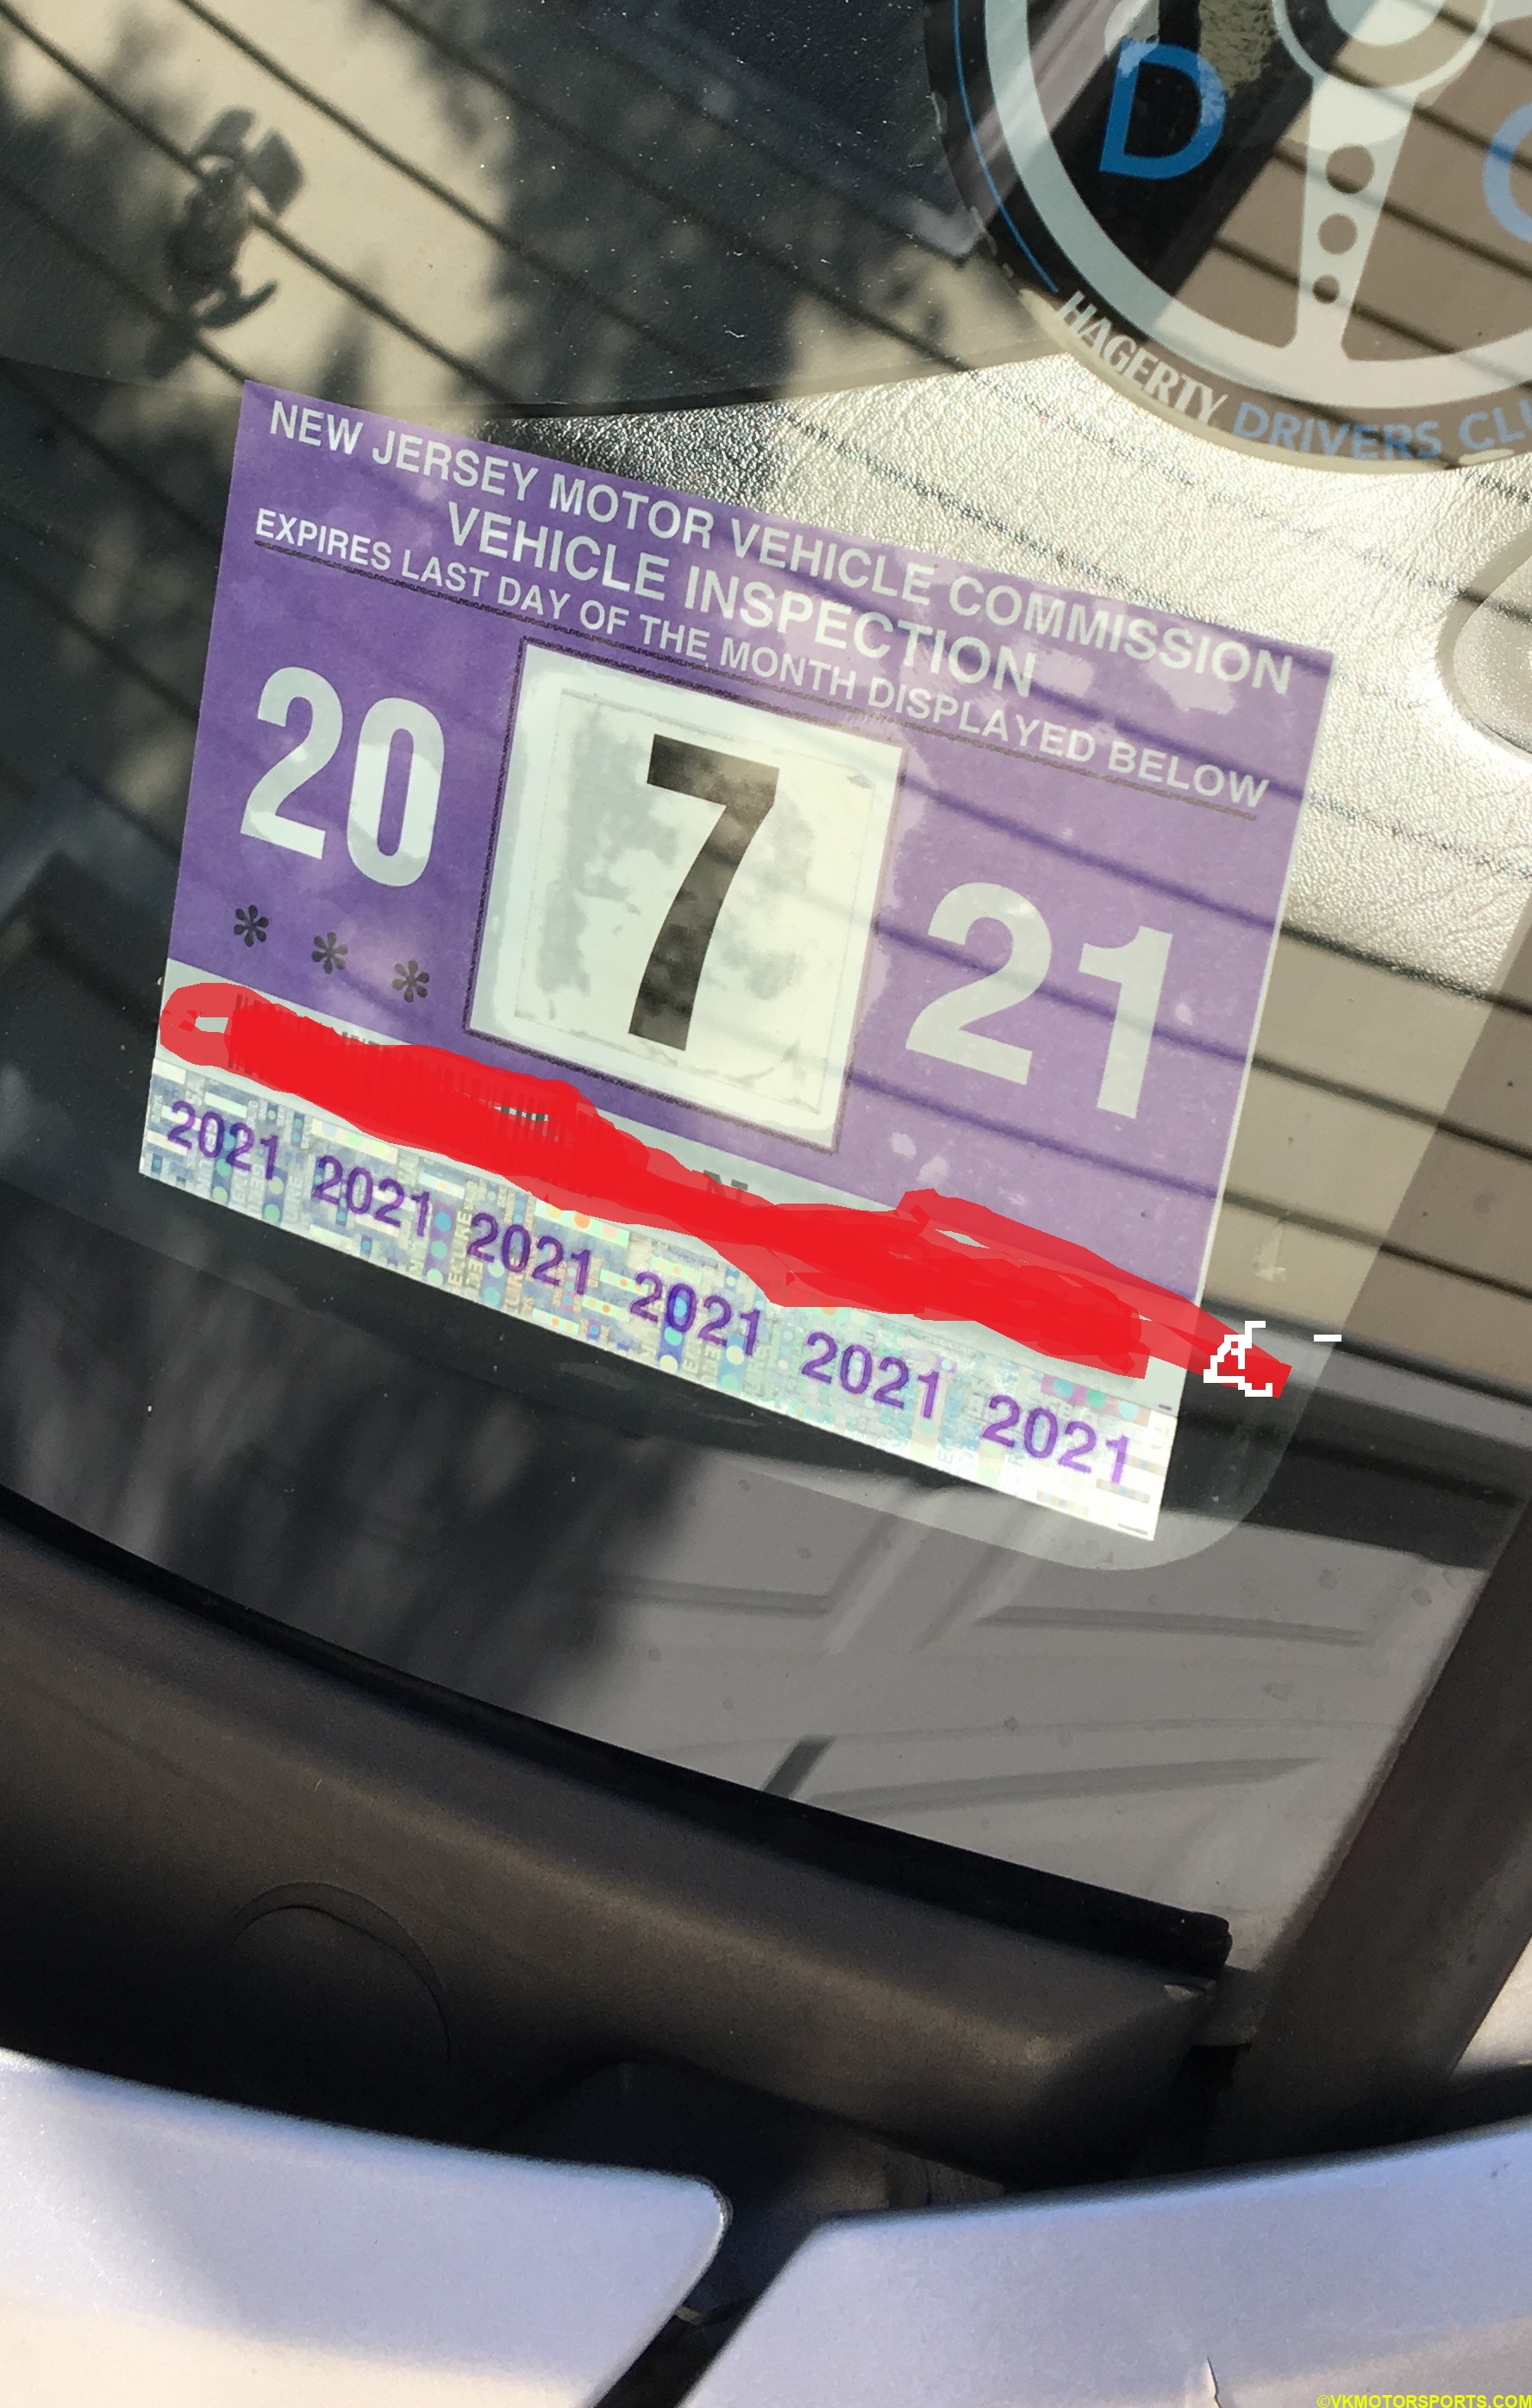 Figure 1. Inspection sticker on windshield